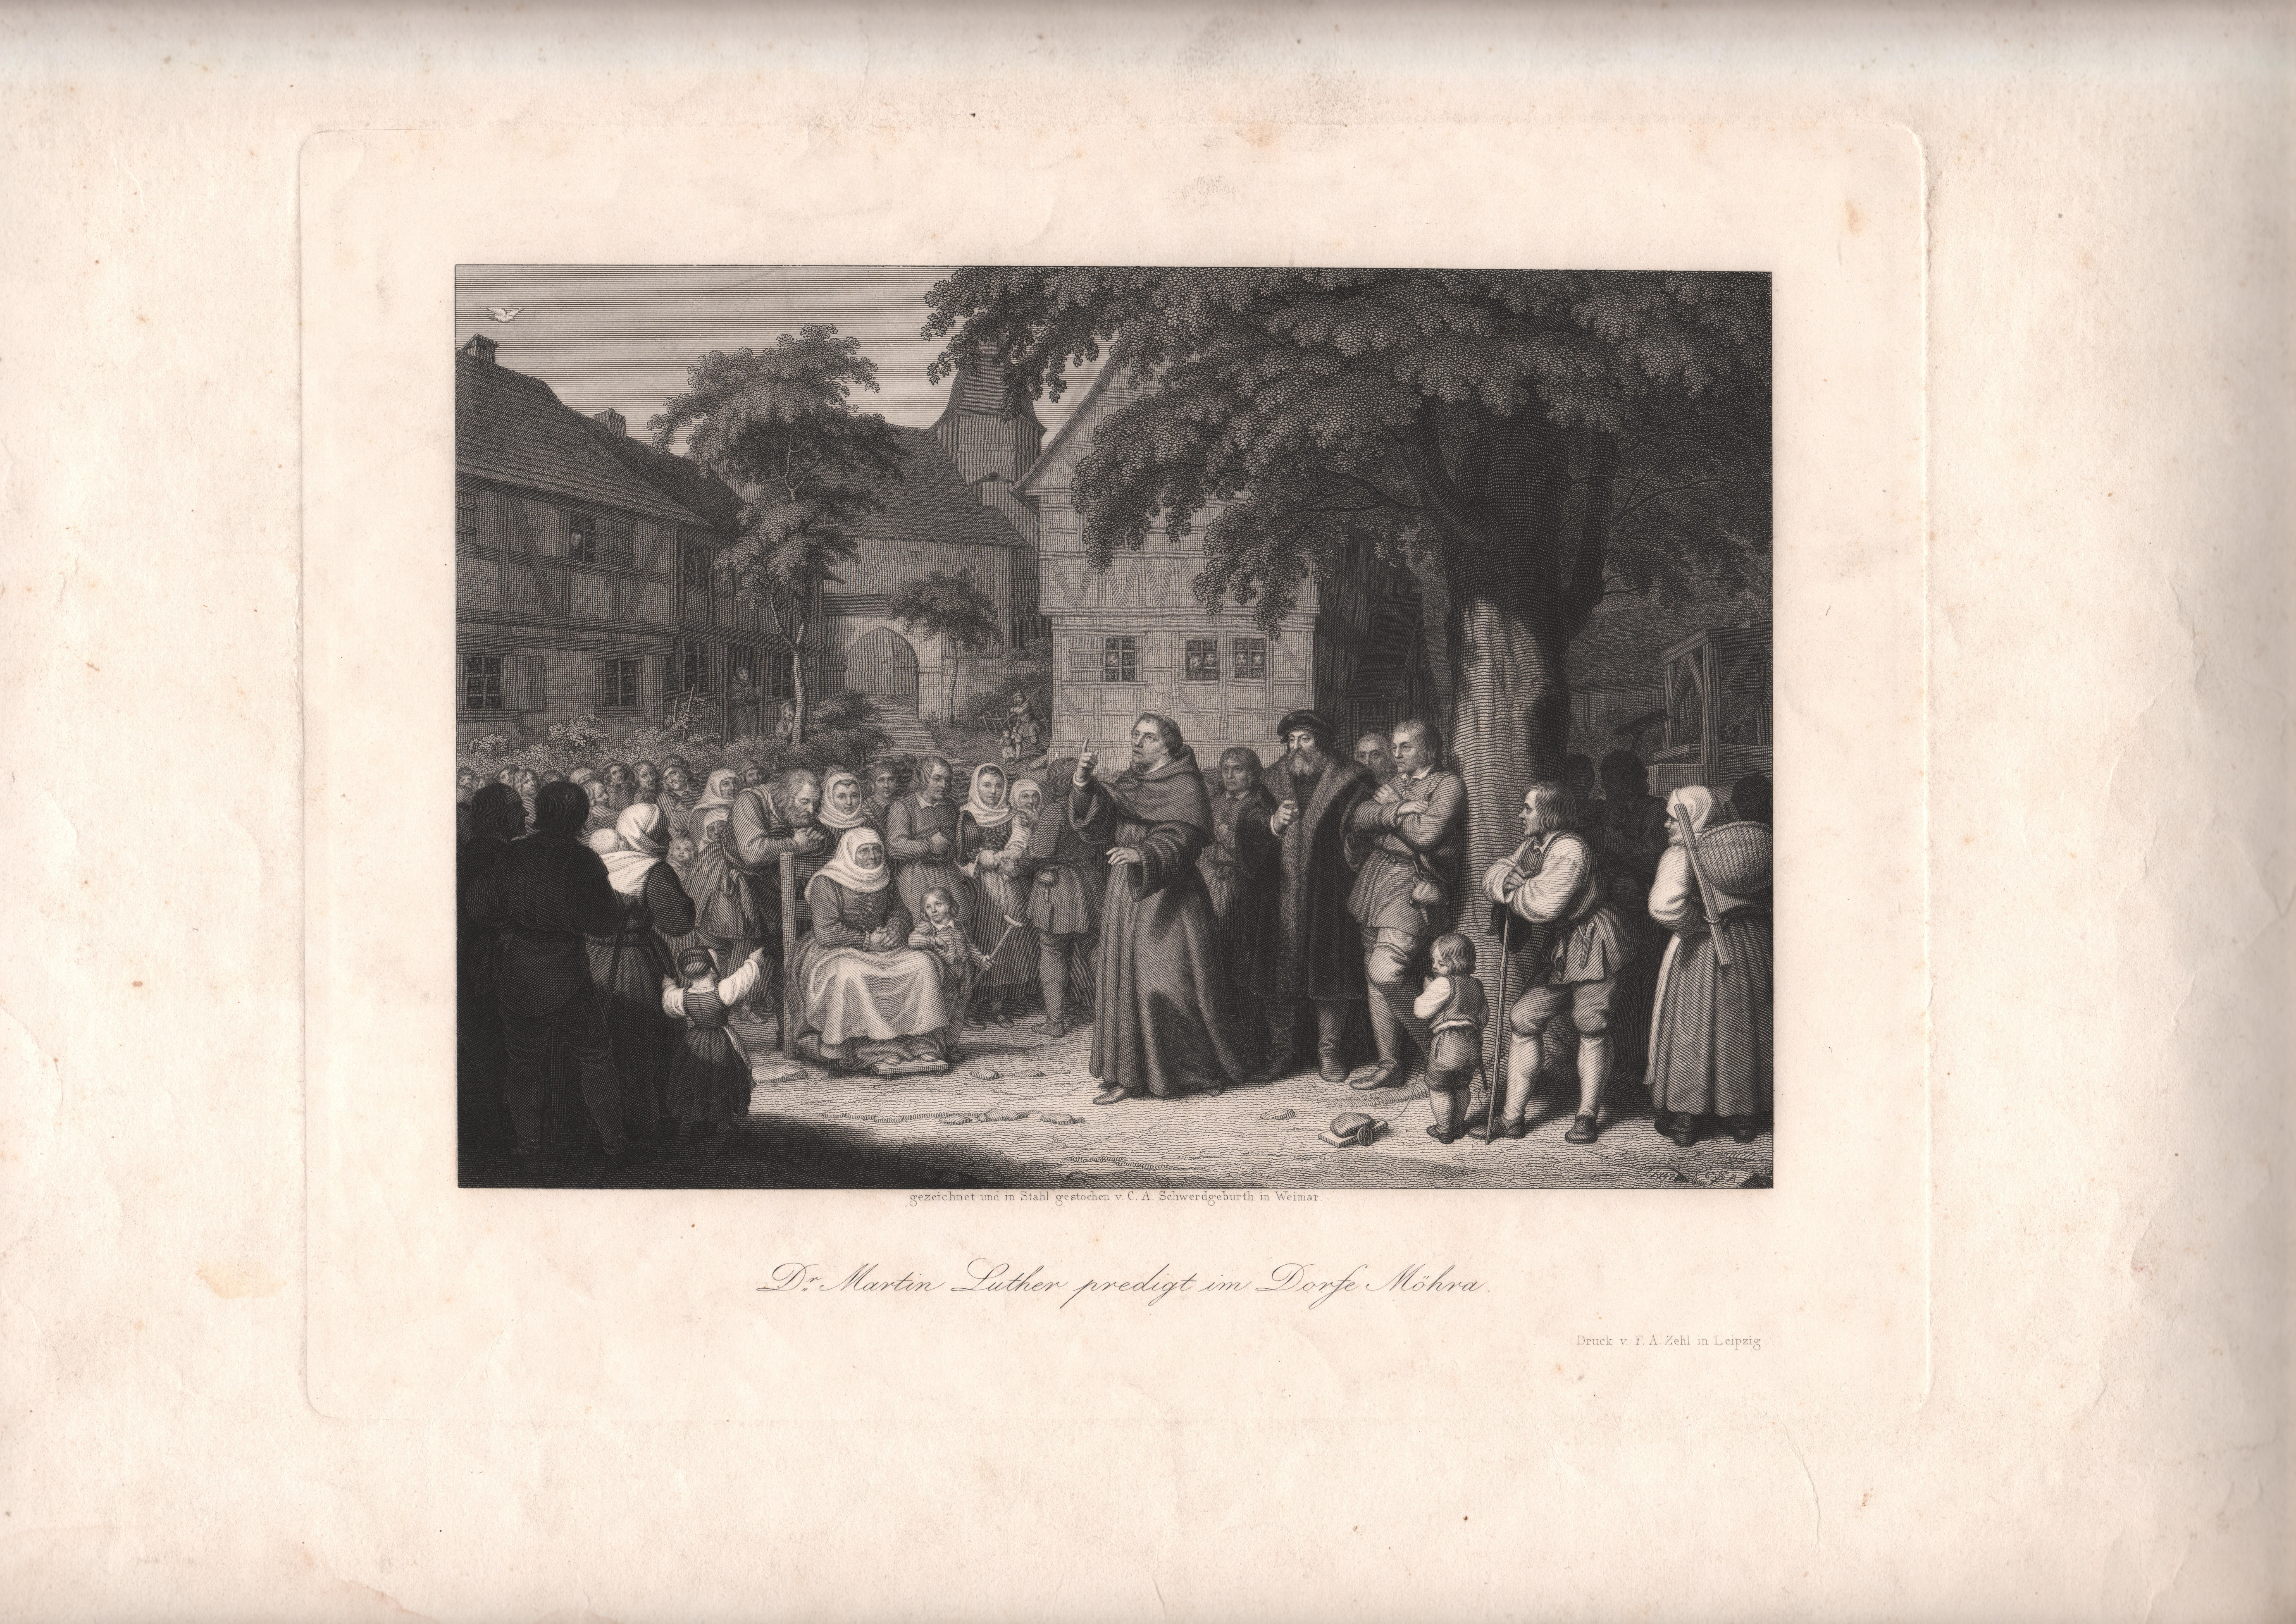 Dirk Walther, Kulturkritik, Reformationstag 2017. M. Luther Grafik 1847. Bild: dirk walther